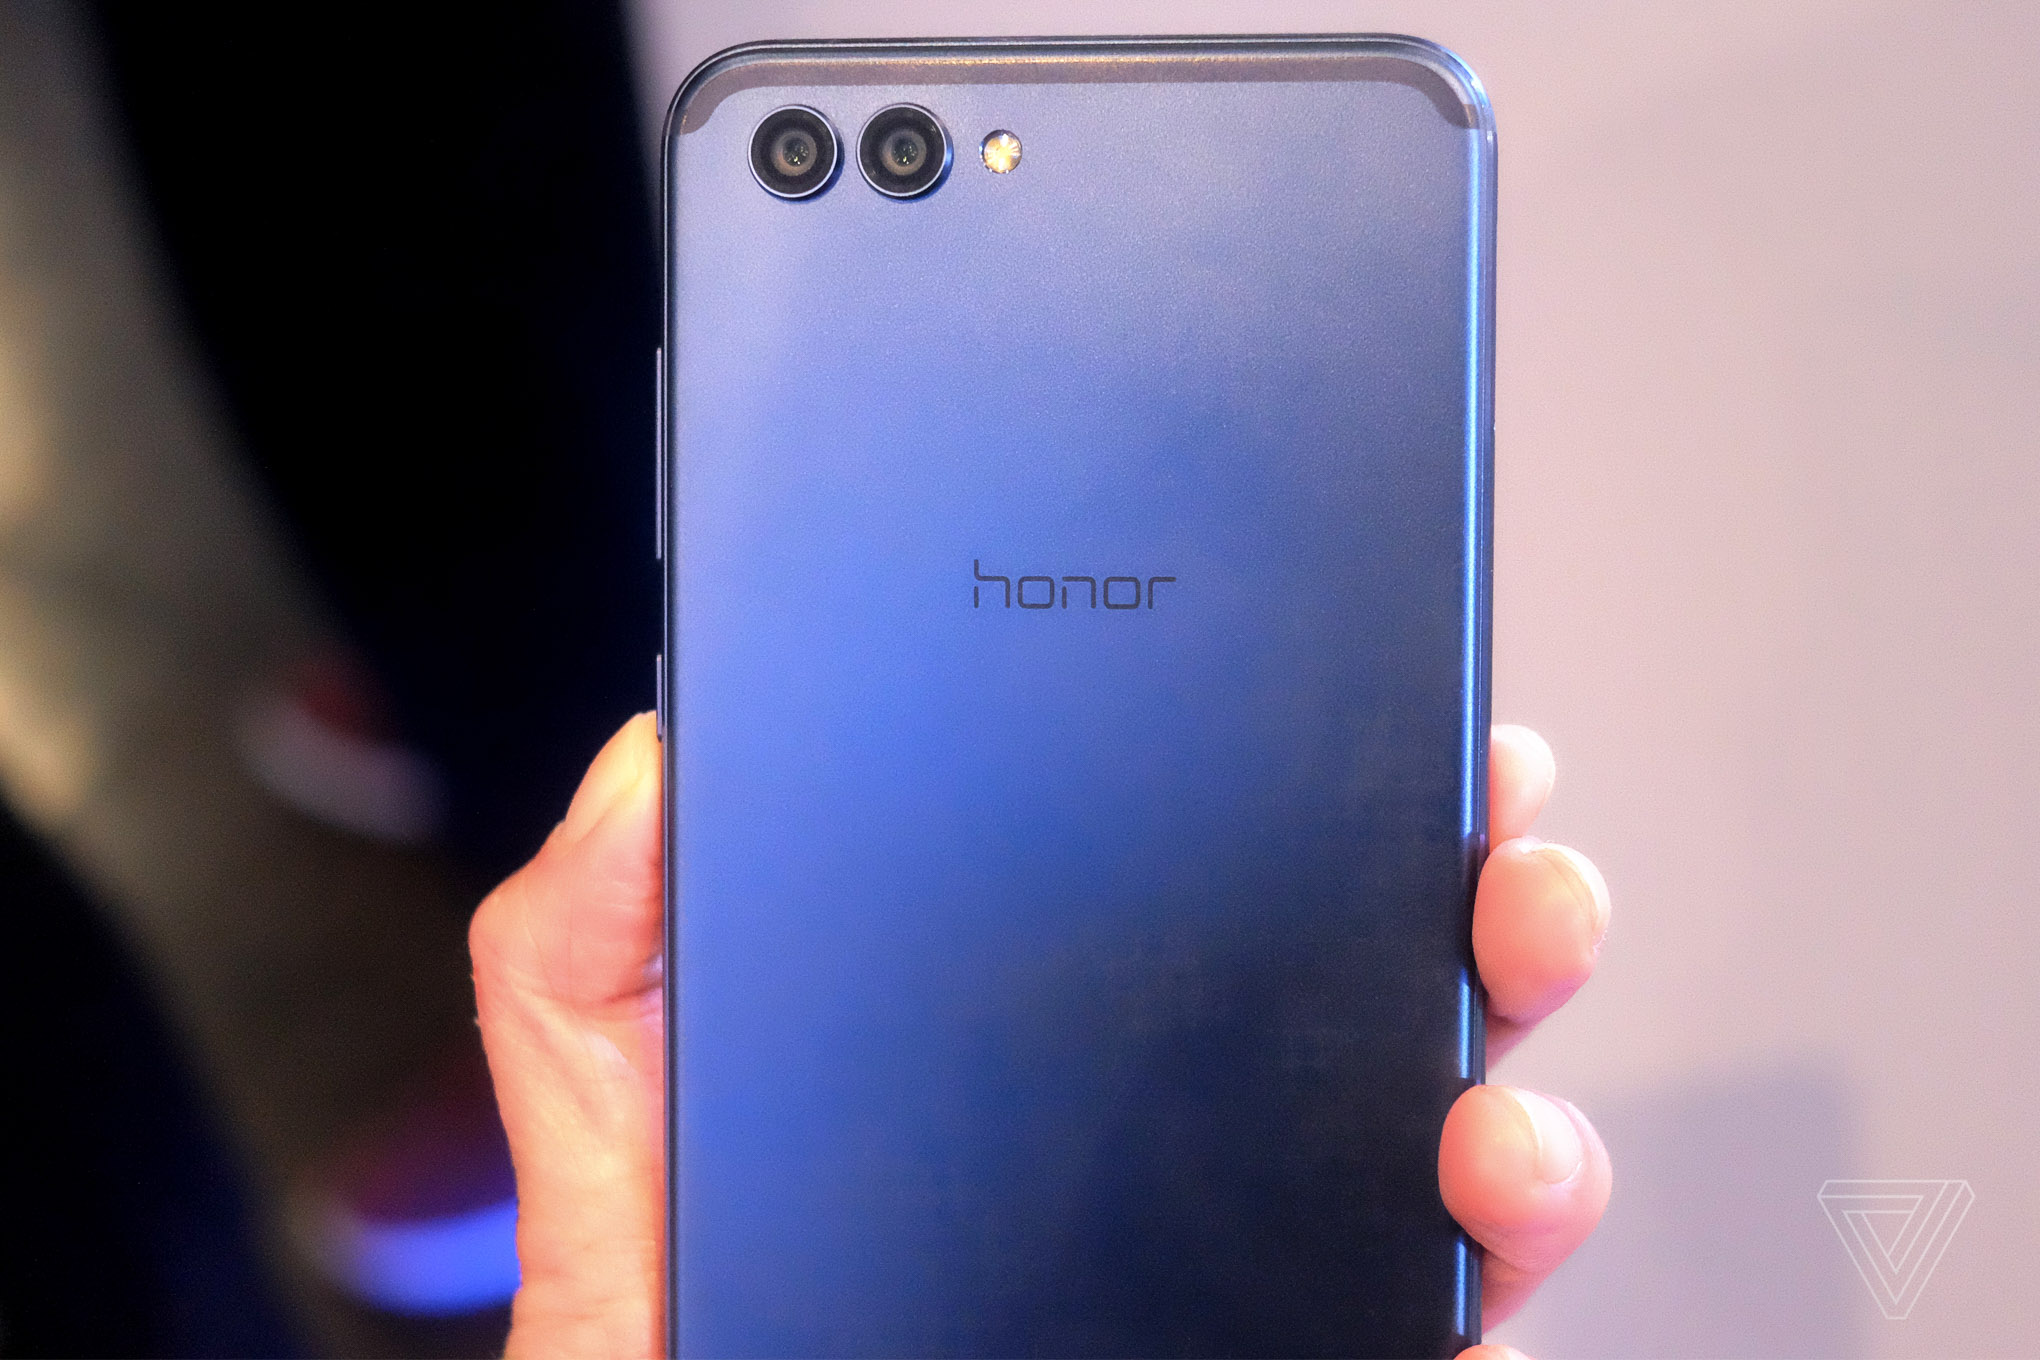 Honor ra mắt 2 chiếc smartphone mới: Honor View 10 và smartphone tầm trung Honor 7X